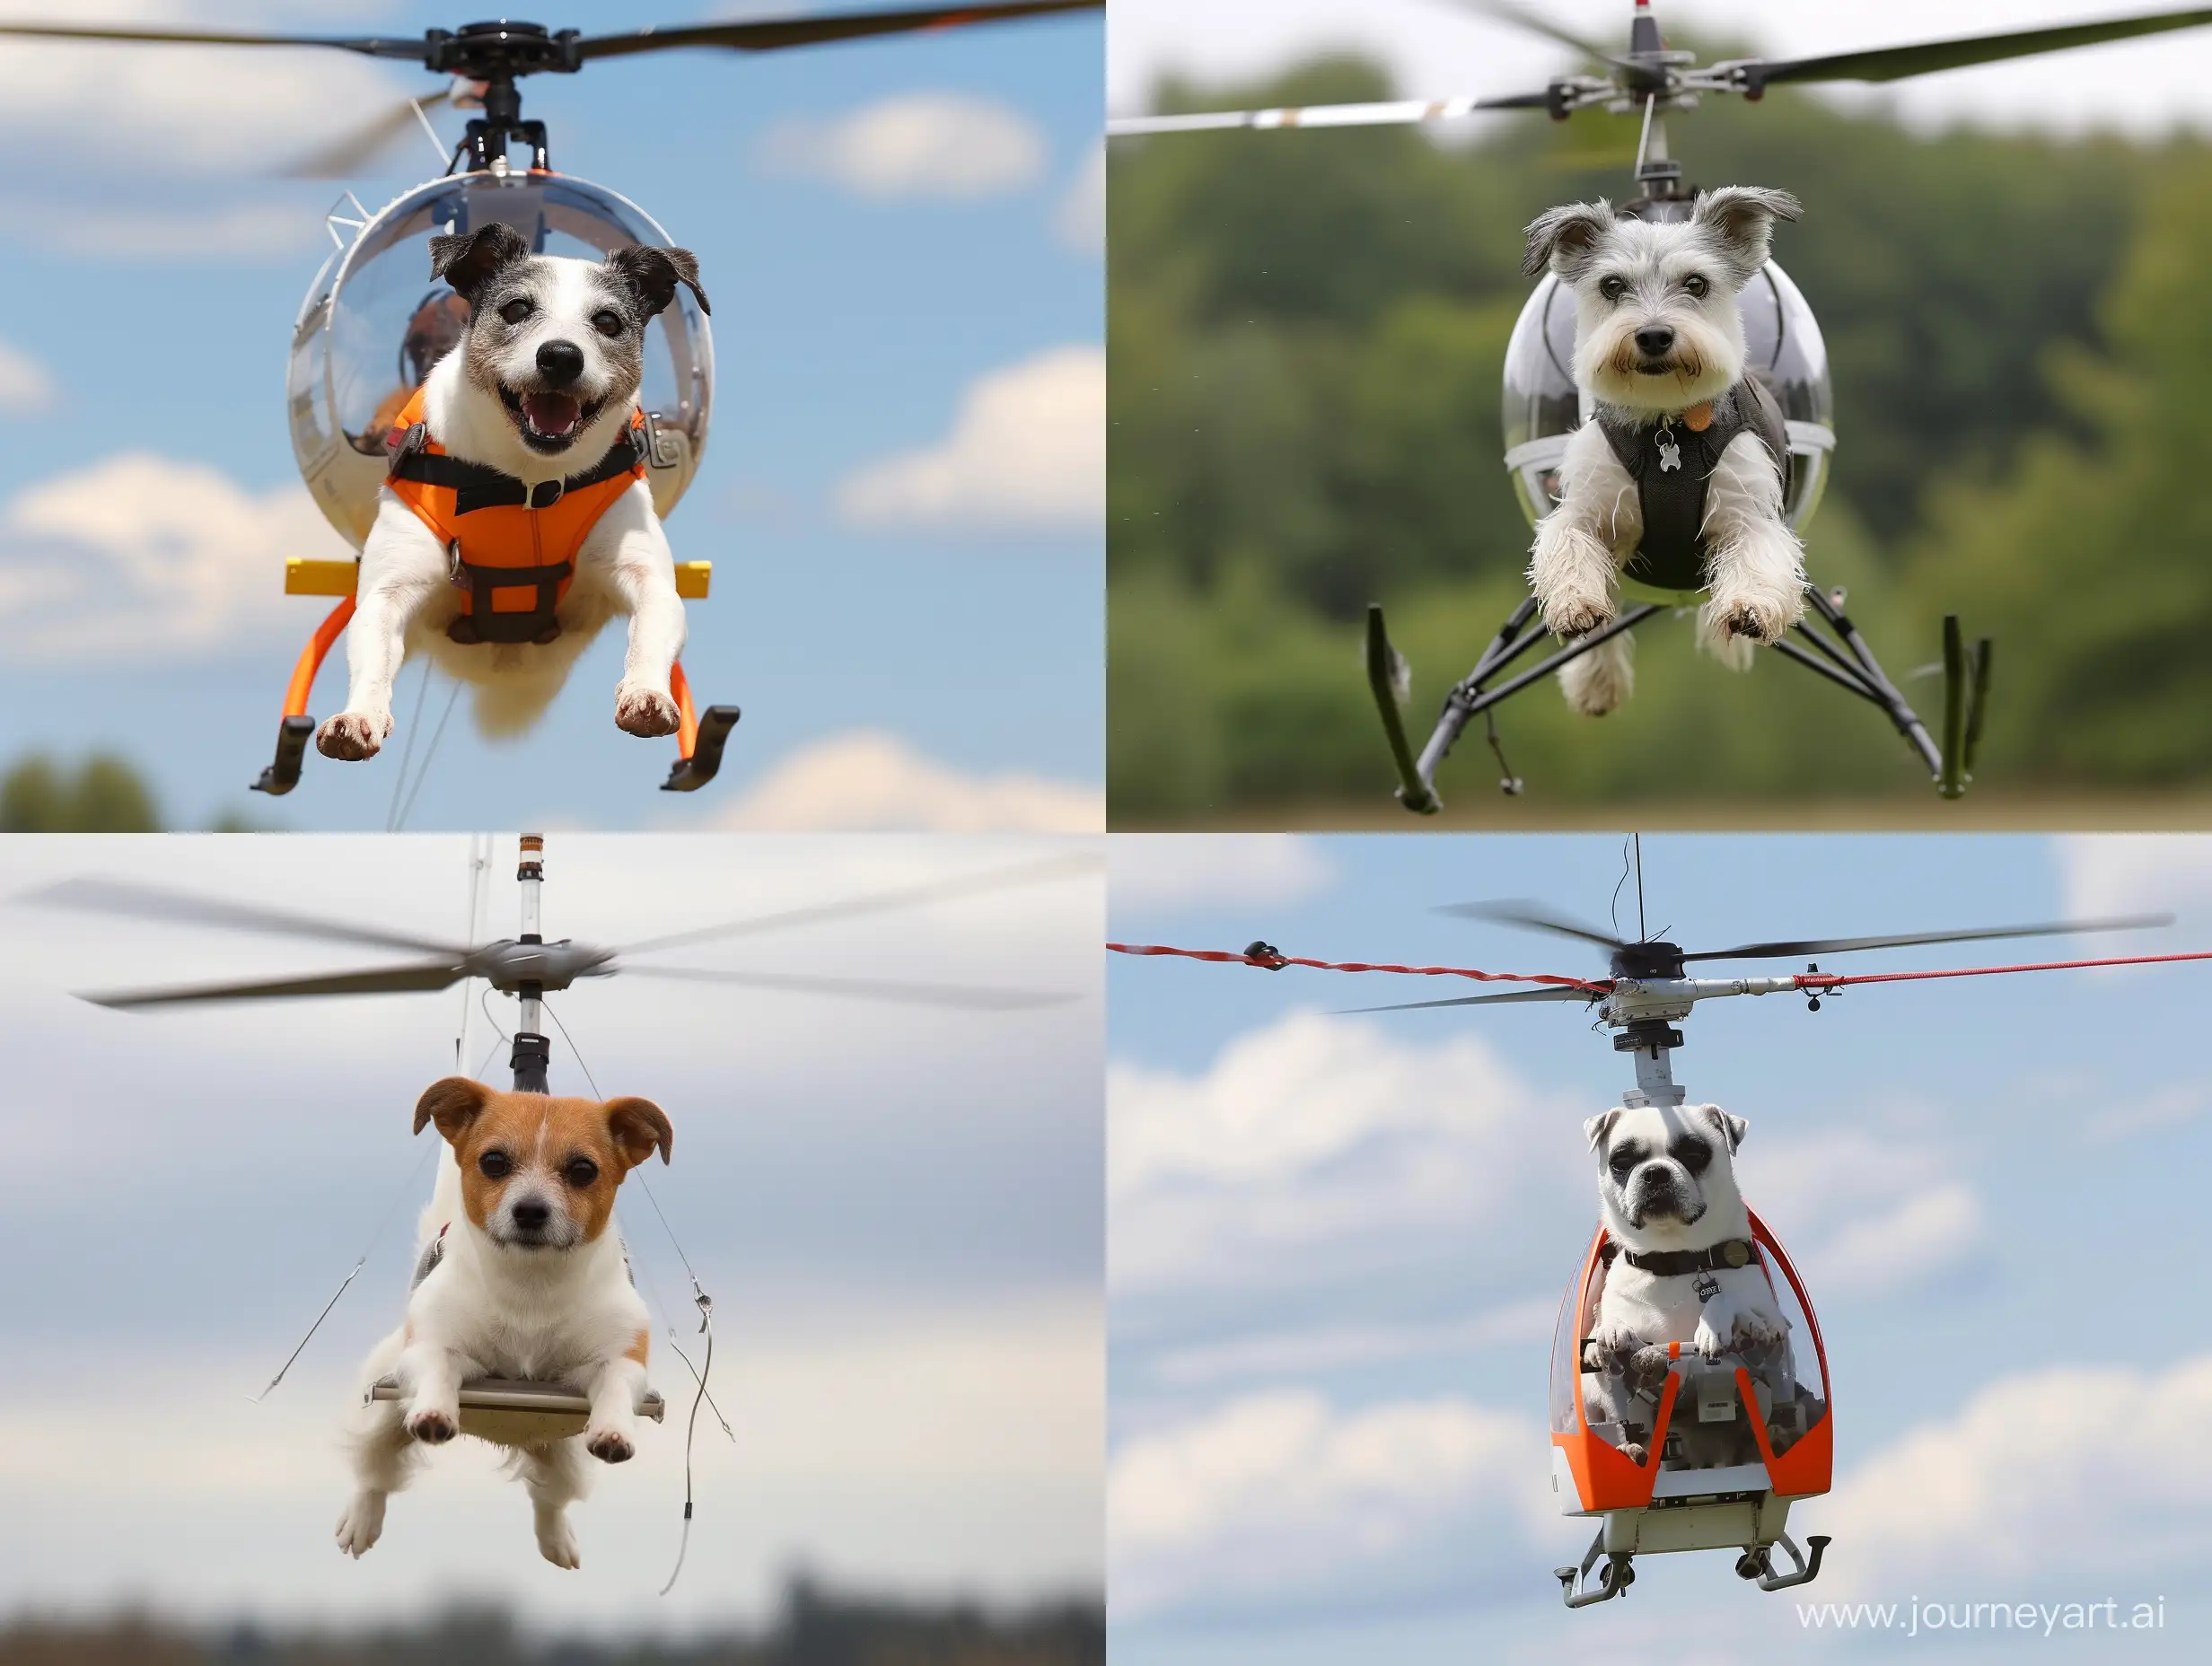 Joyful-Dog-Flying-High-in-Blue-Skies-Playful-Canine-Aviator